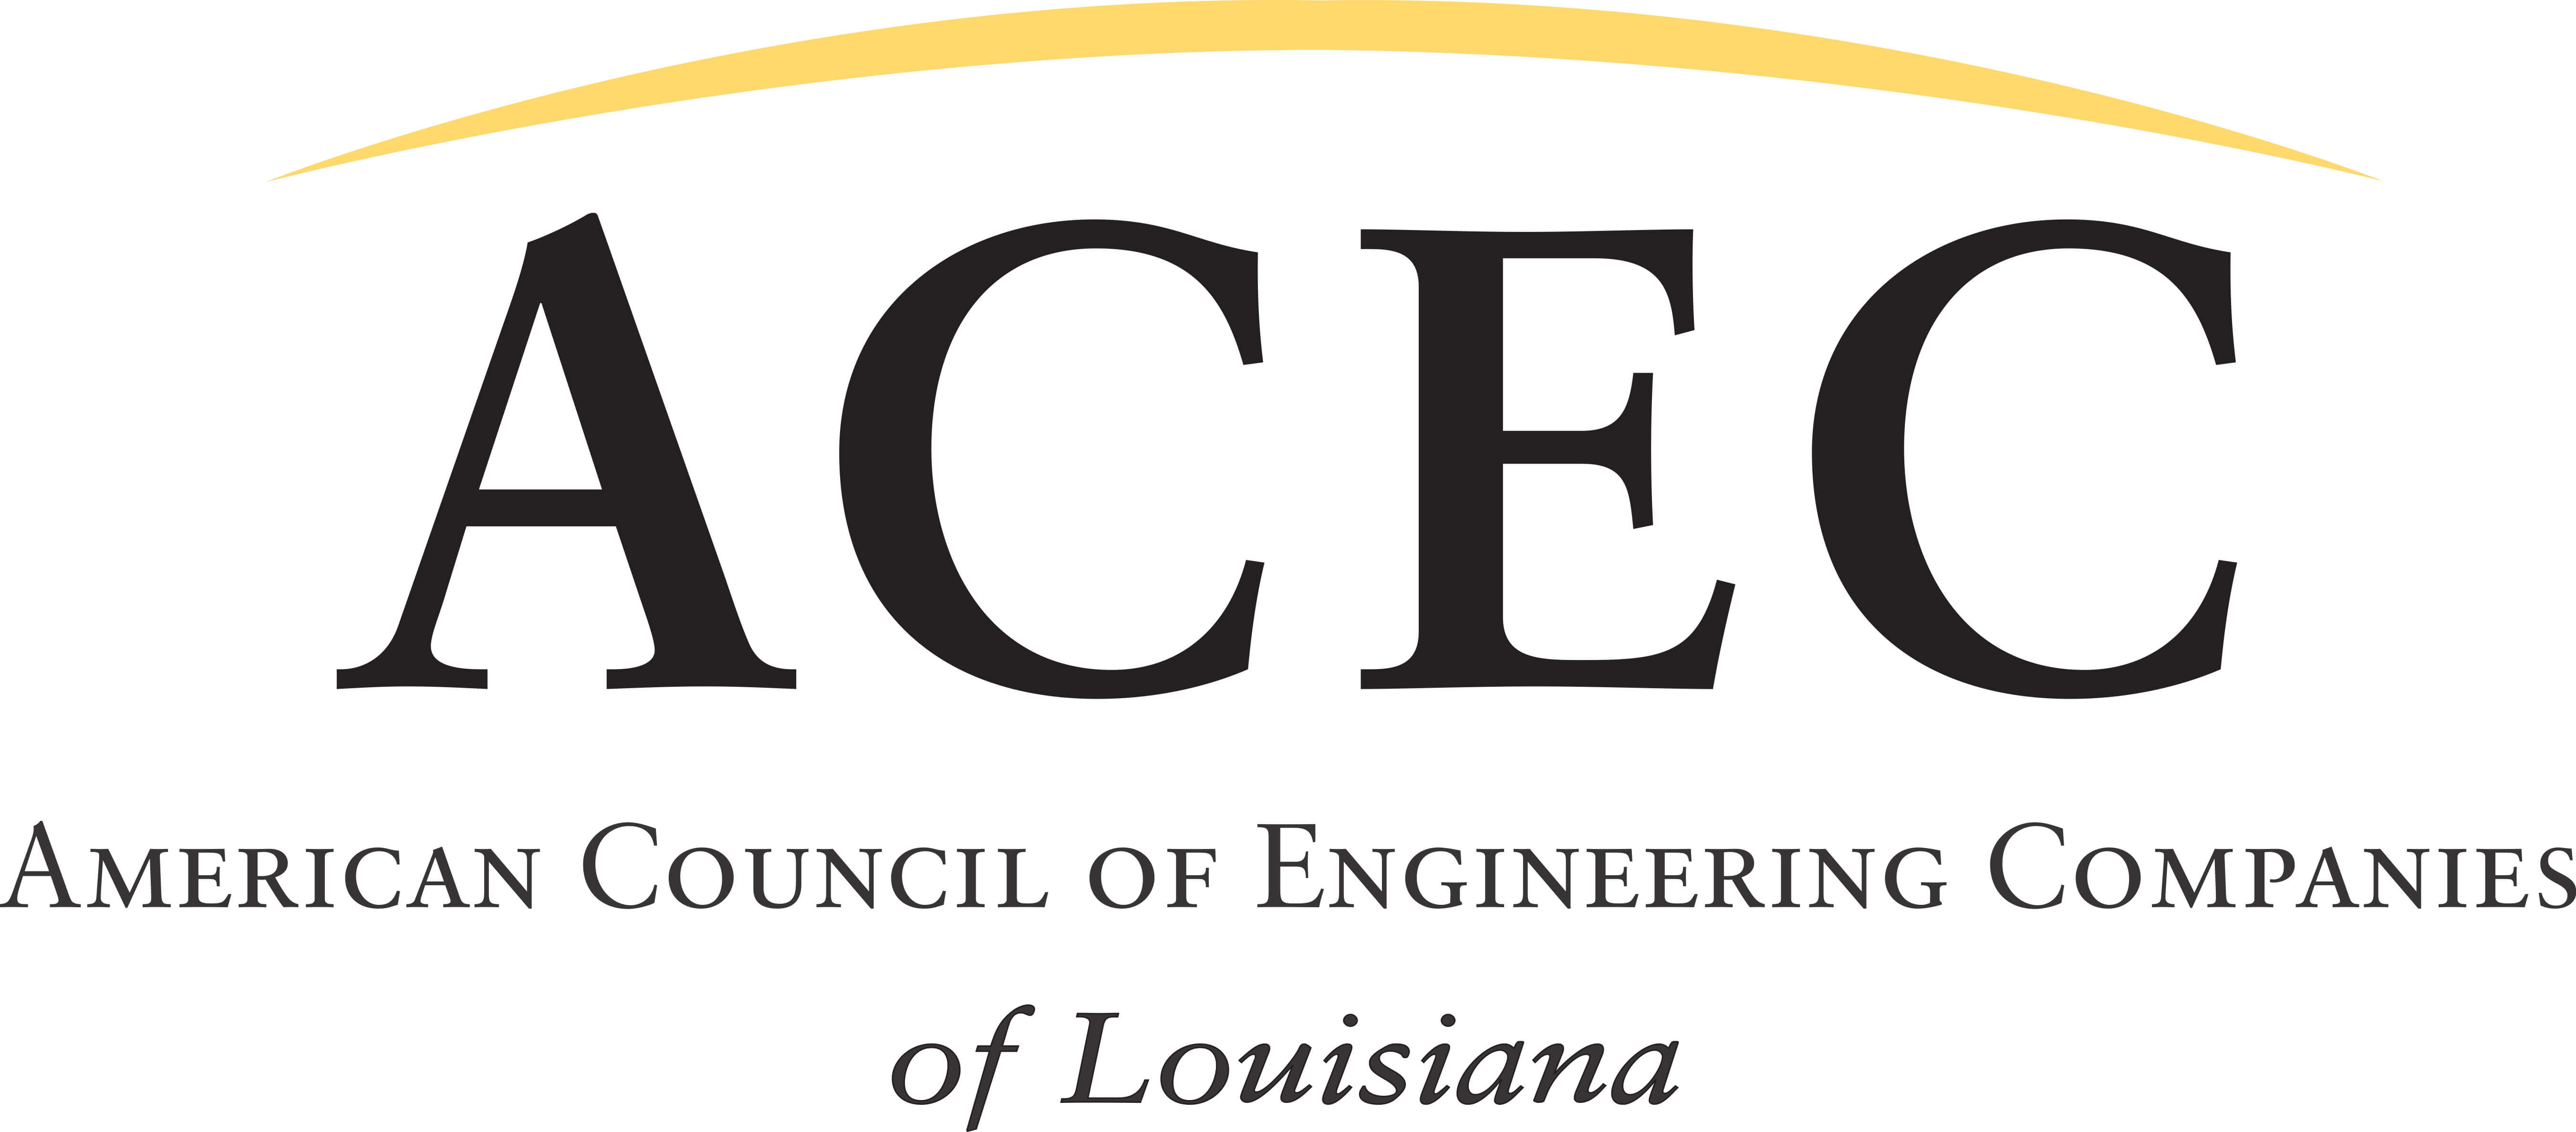 acec Louisiana logo